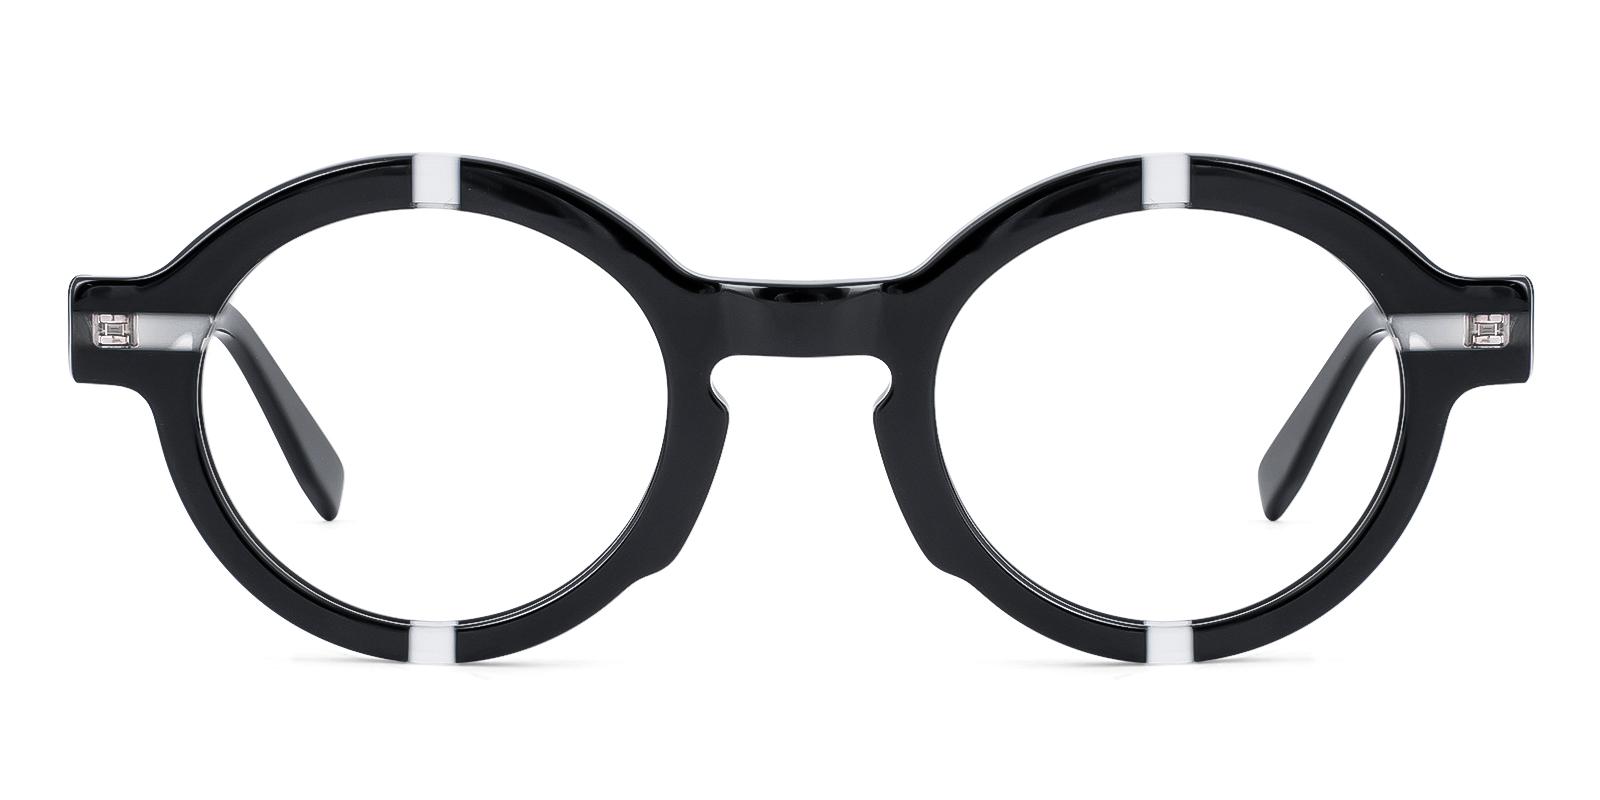 Bellator Black Acetate Eyeglasses , SpringHinges , UniversalBridgeFit Frames from ABBE Glasses